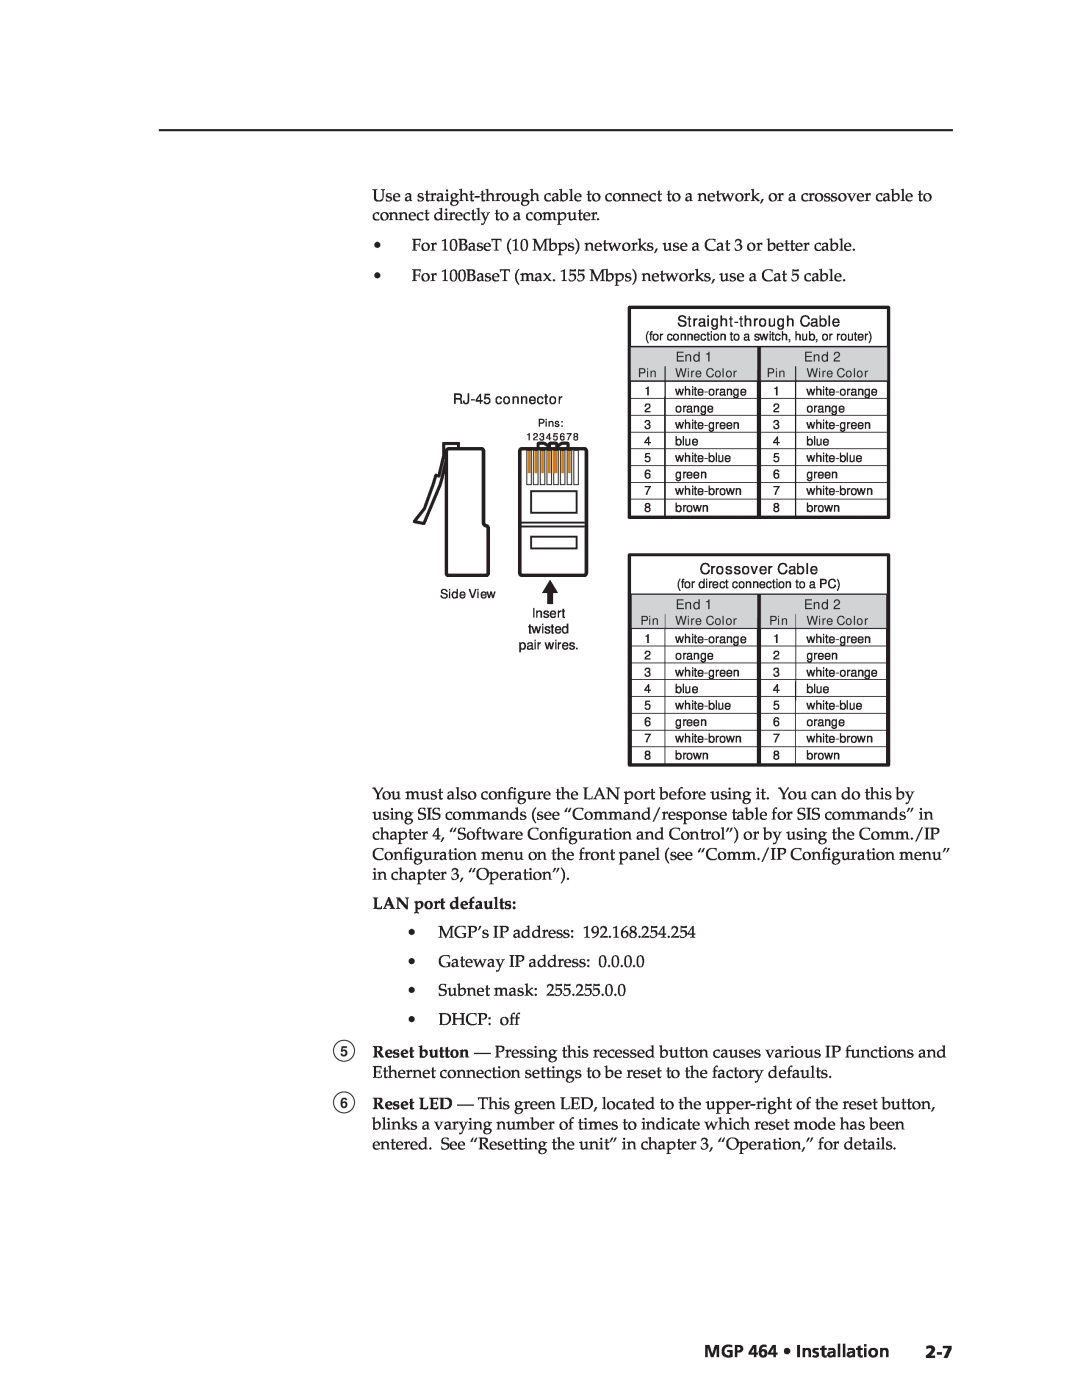 Extron electronic MGP 464 DI manual Preliminary, LAN port defaults, MGP 464 Installation 